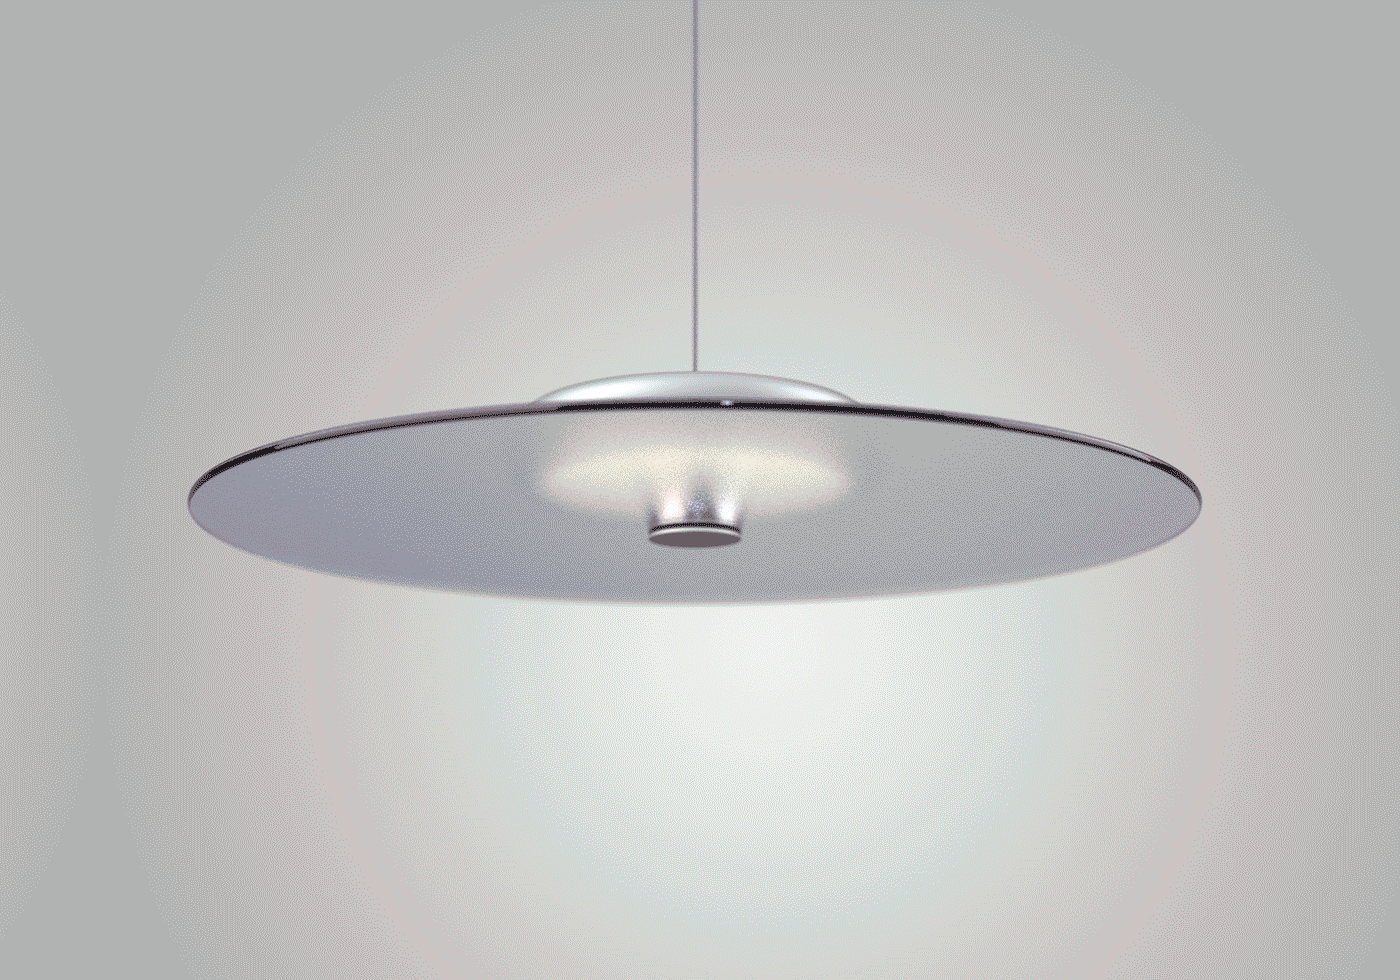 cantador miguel silva design light sound led RGB speaker ceiling Lamp Domus Academy play curiosity